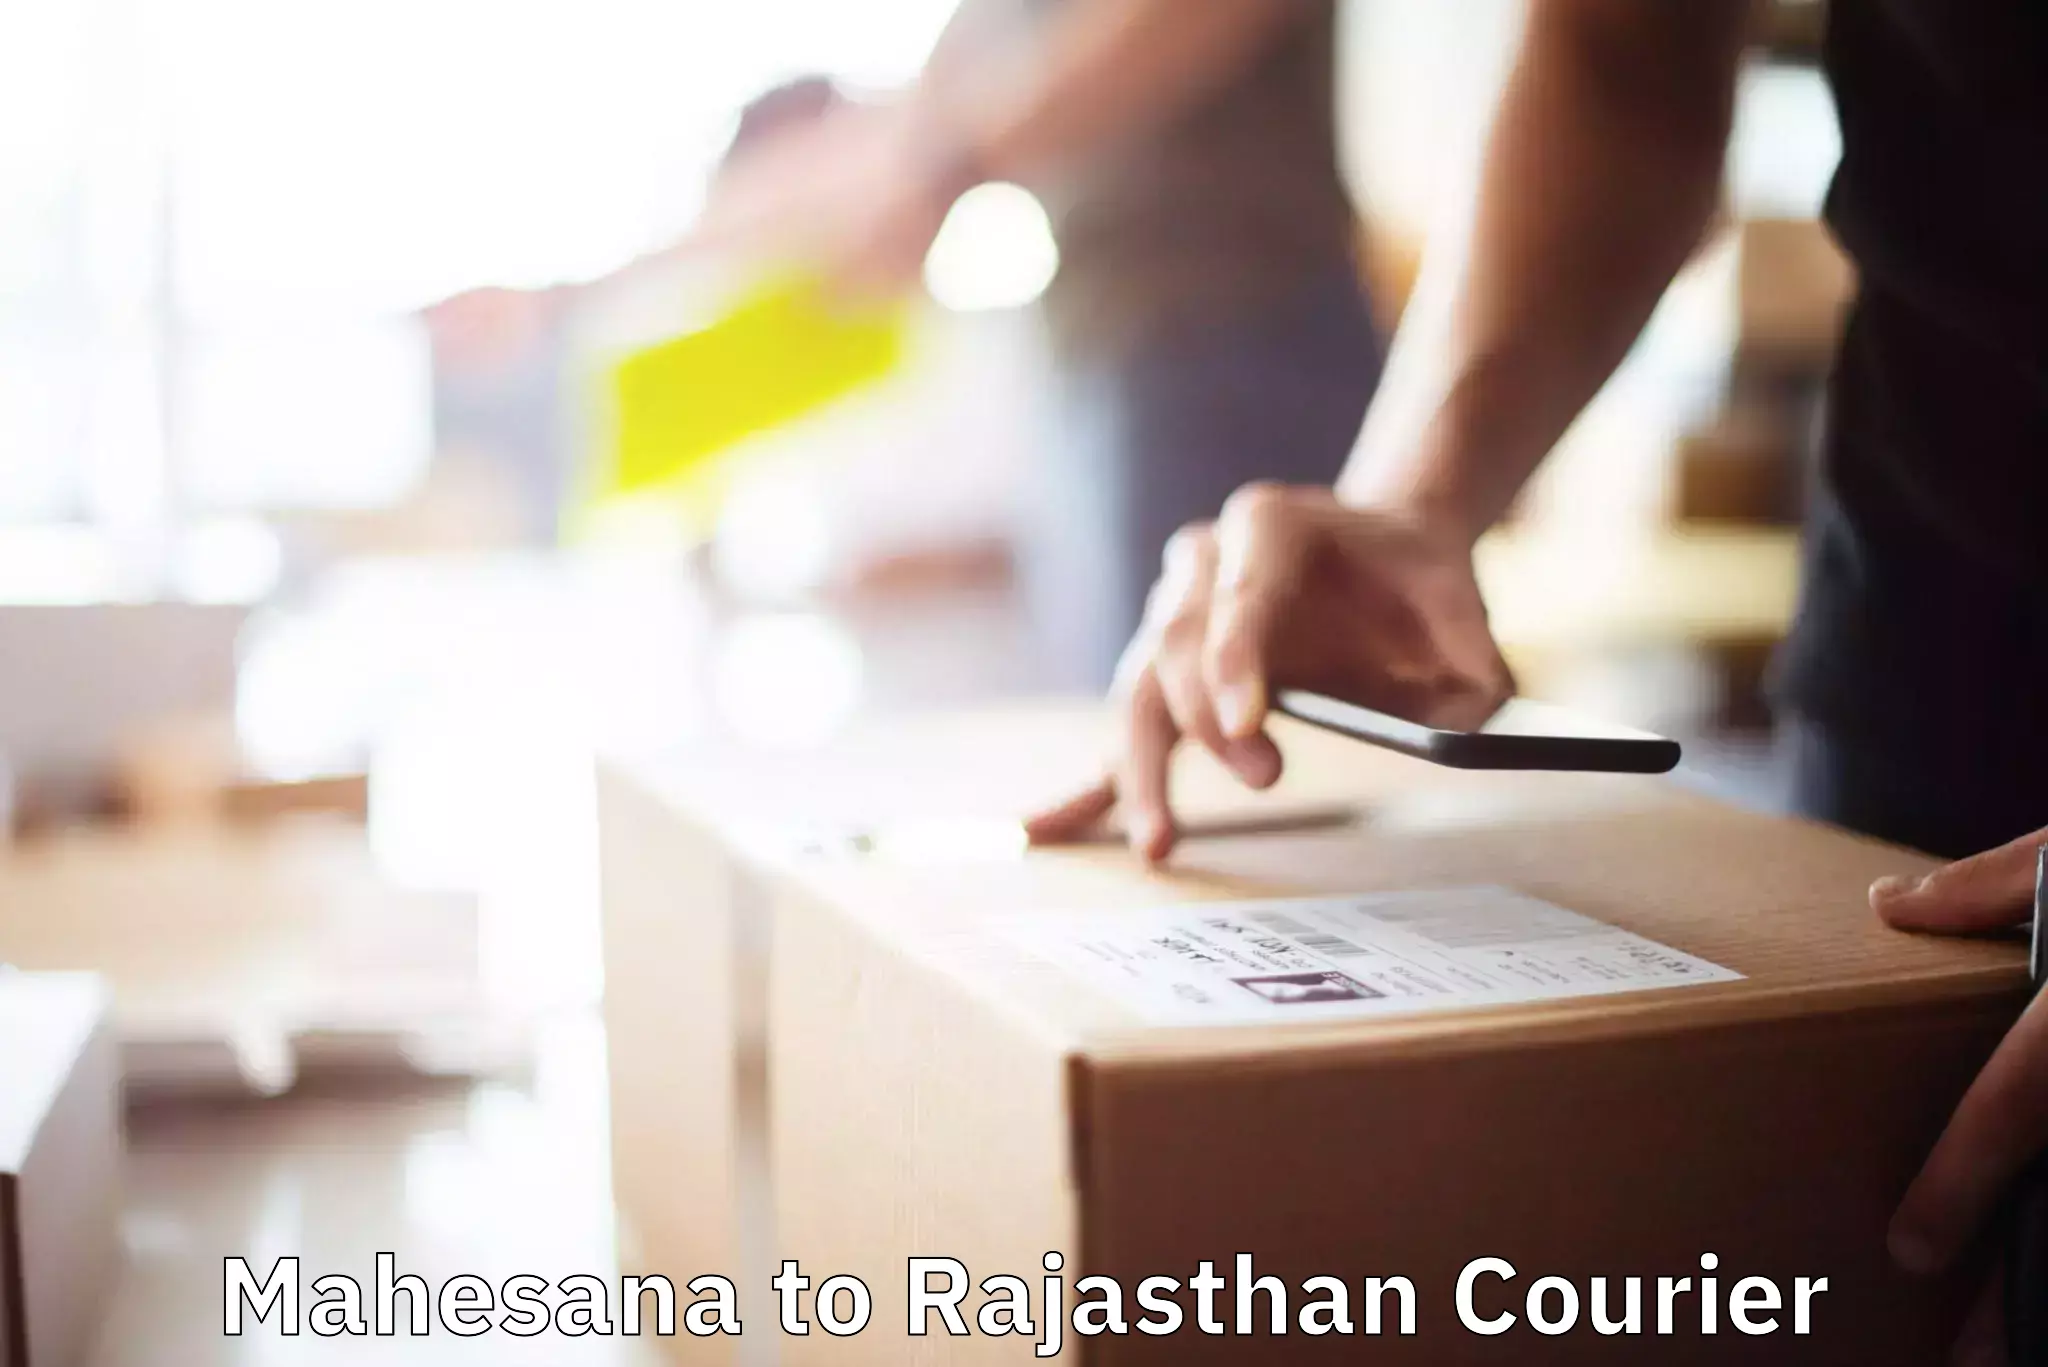 Furniture delivery service Mahesana to Tibbi